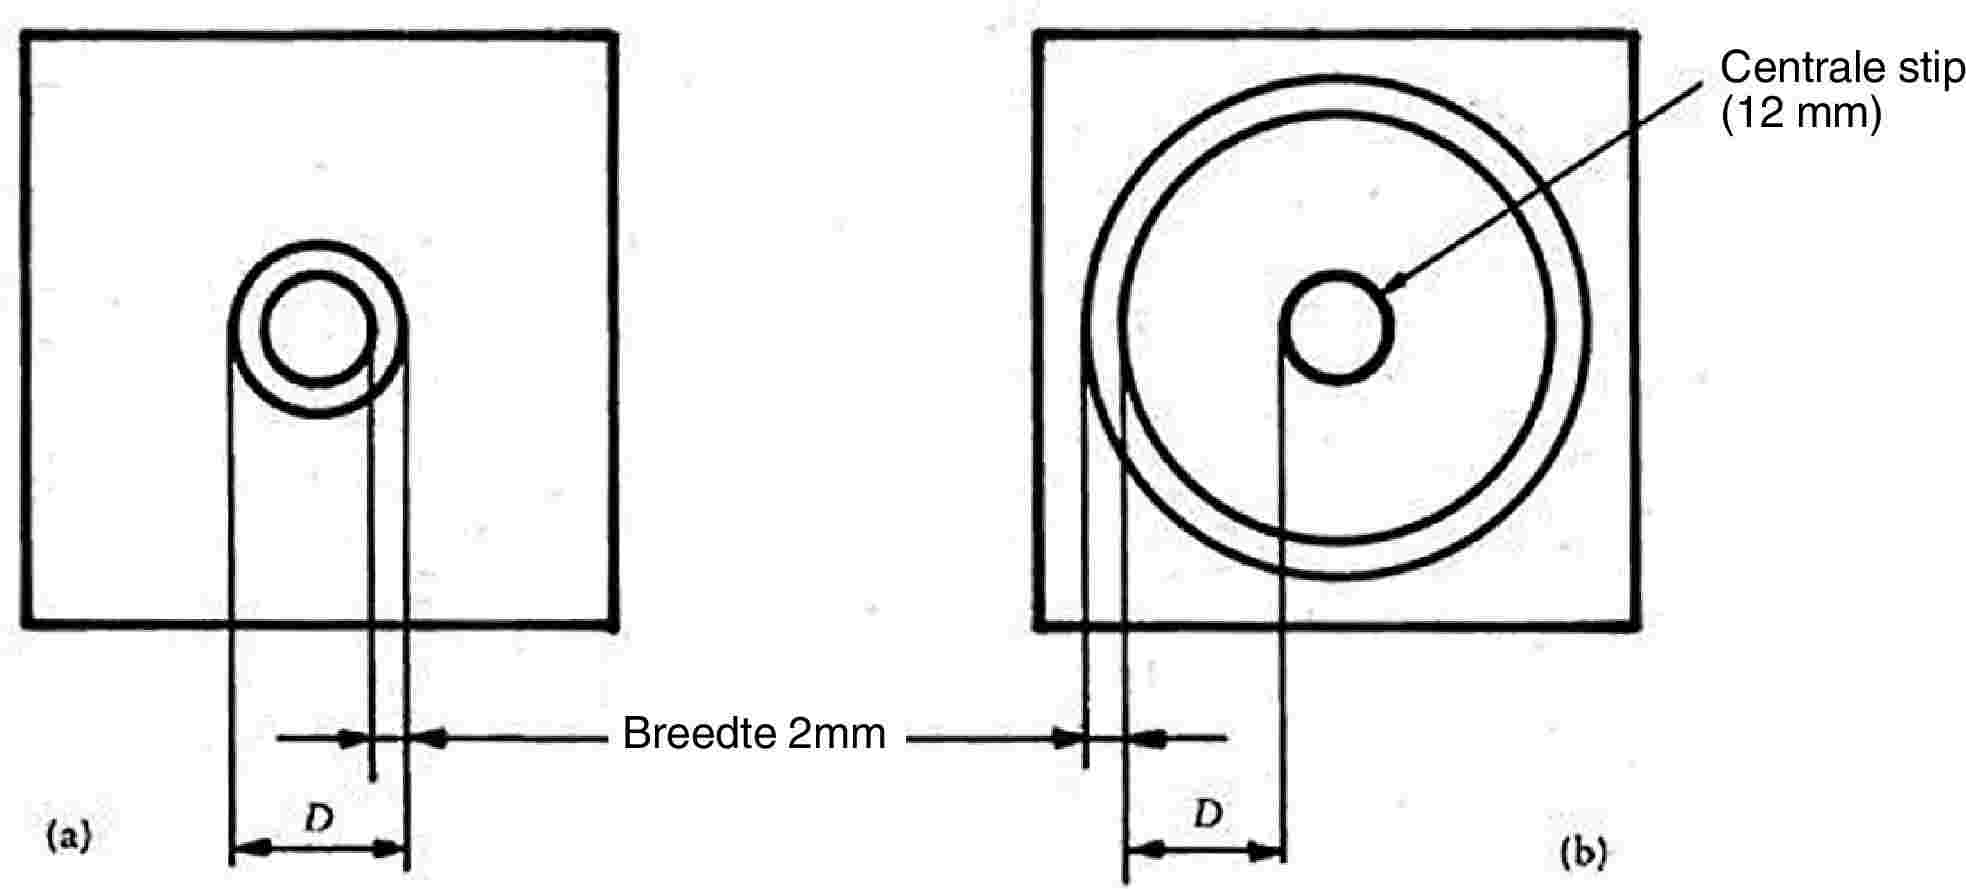 Centrale stip (12 mm)Breedte 2mm